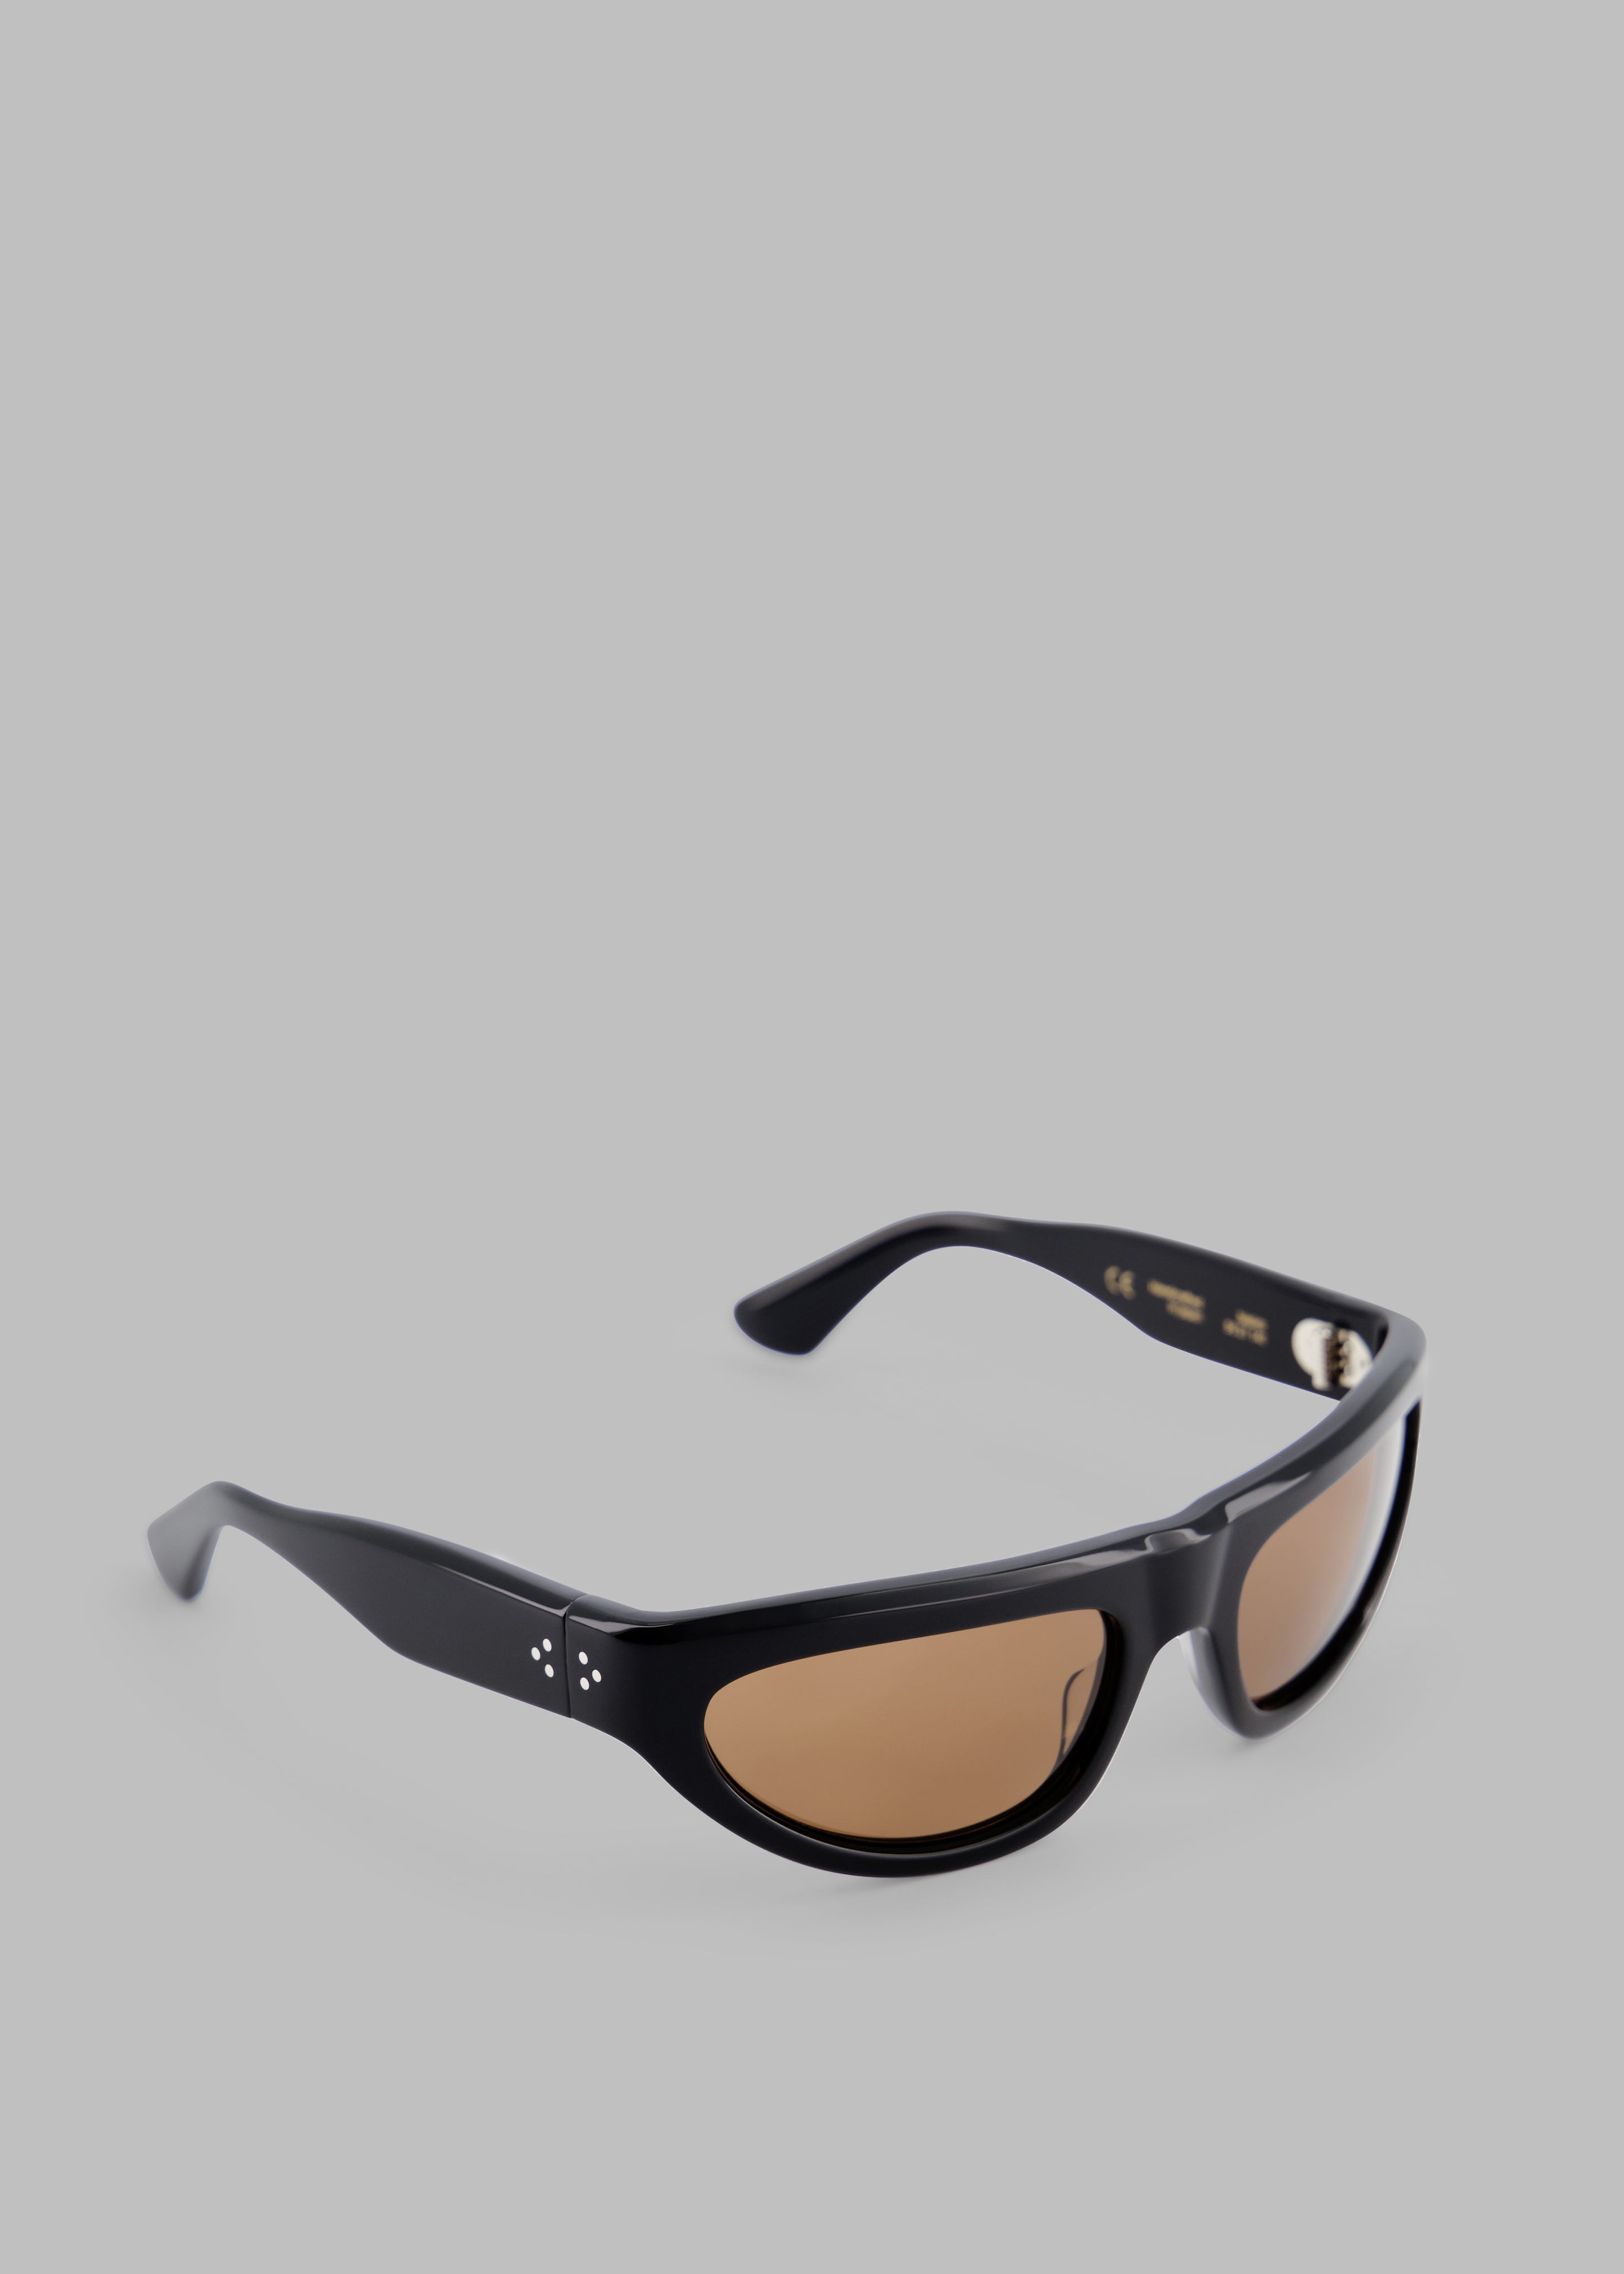 Port Tanger Malick Sunglasses - Black Acetate/Tobacco Lens - 3